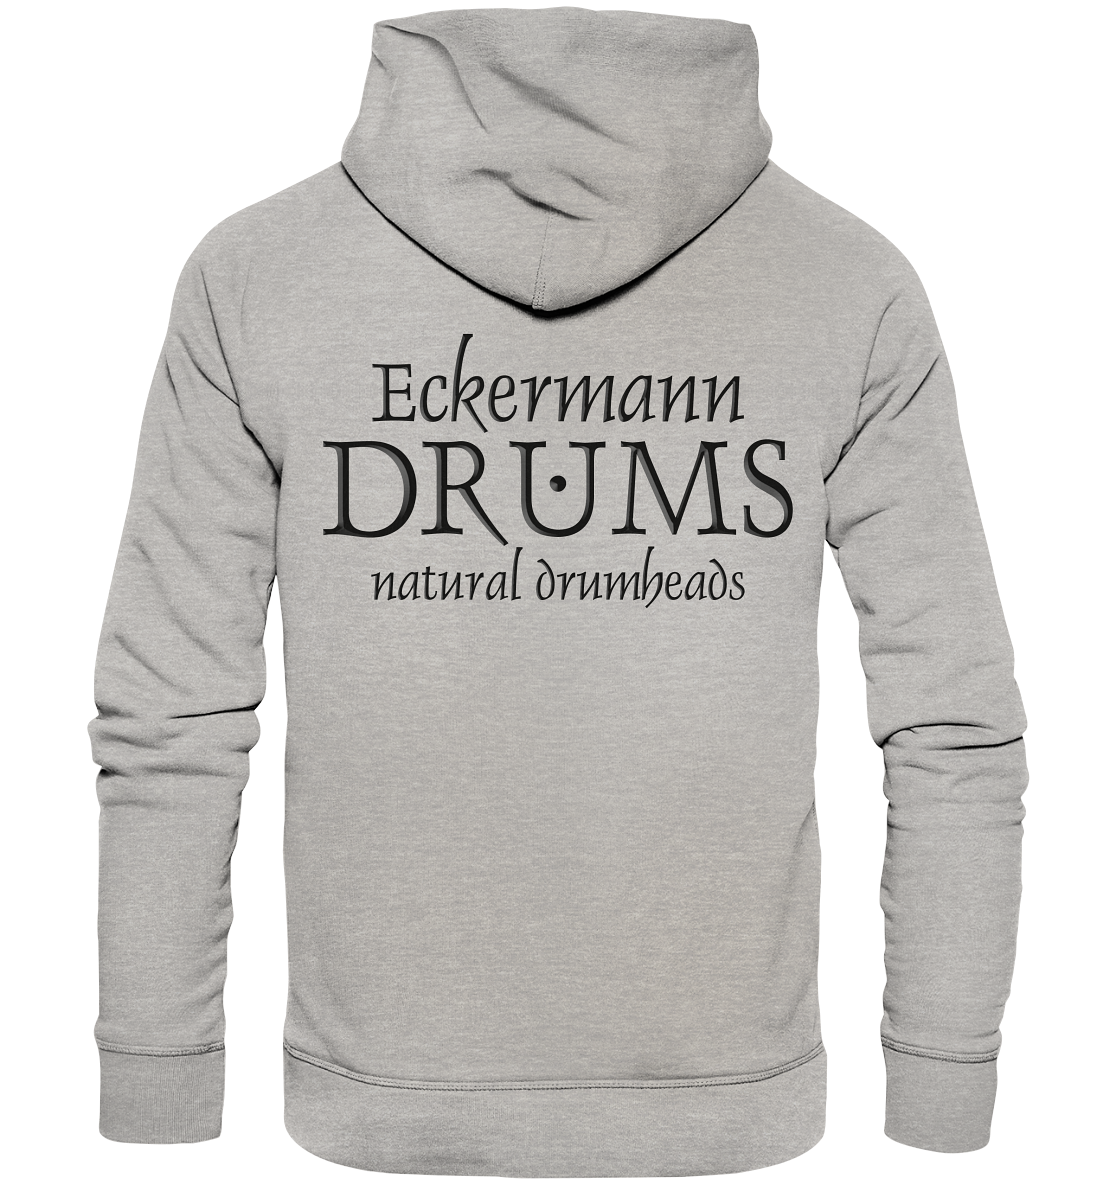 Eckermann DRUMS - Organic Fashion Hoodie